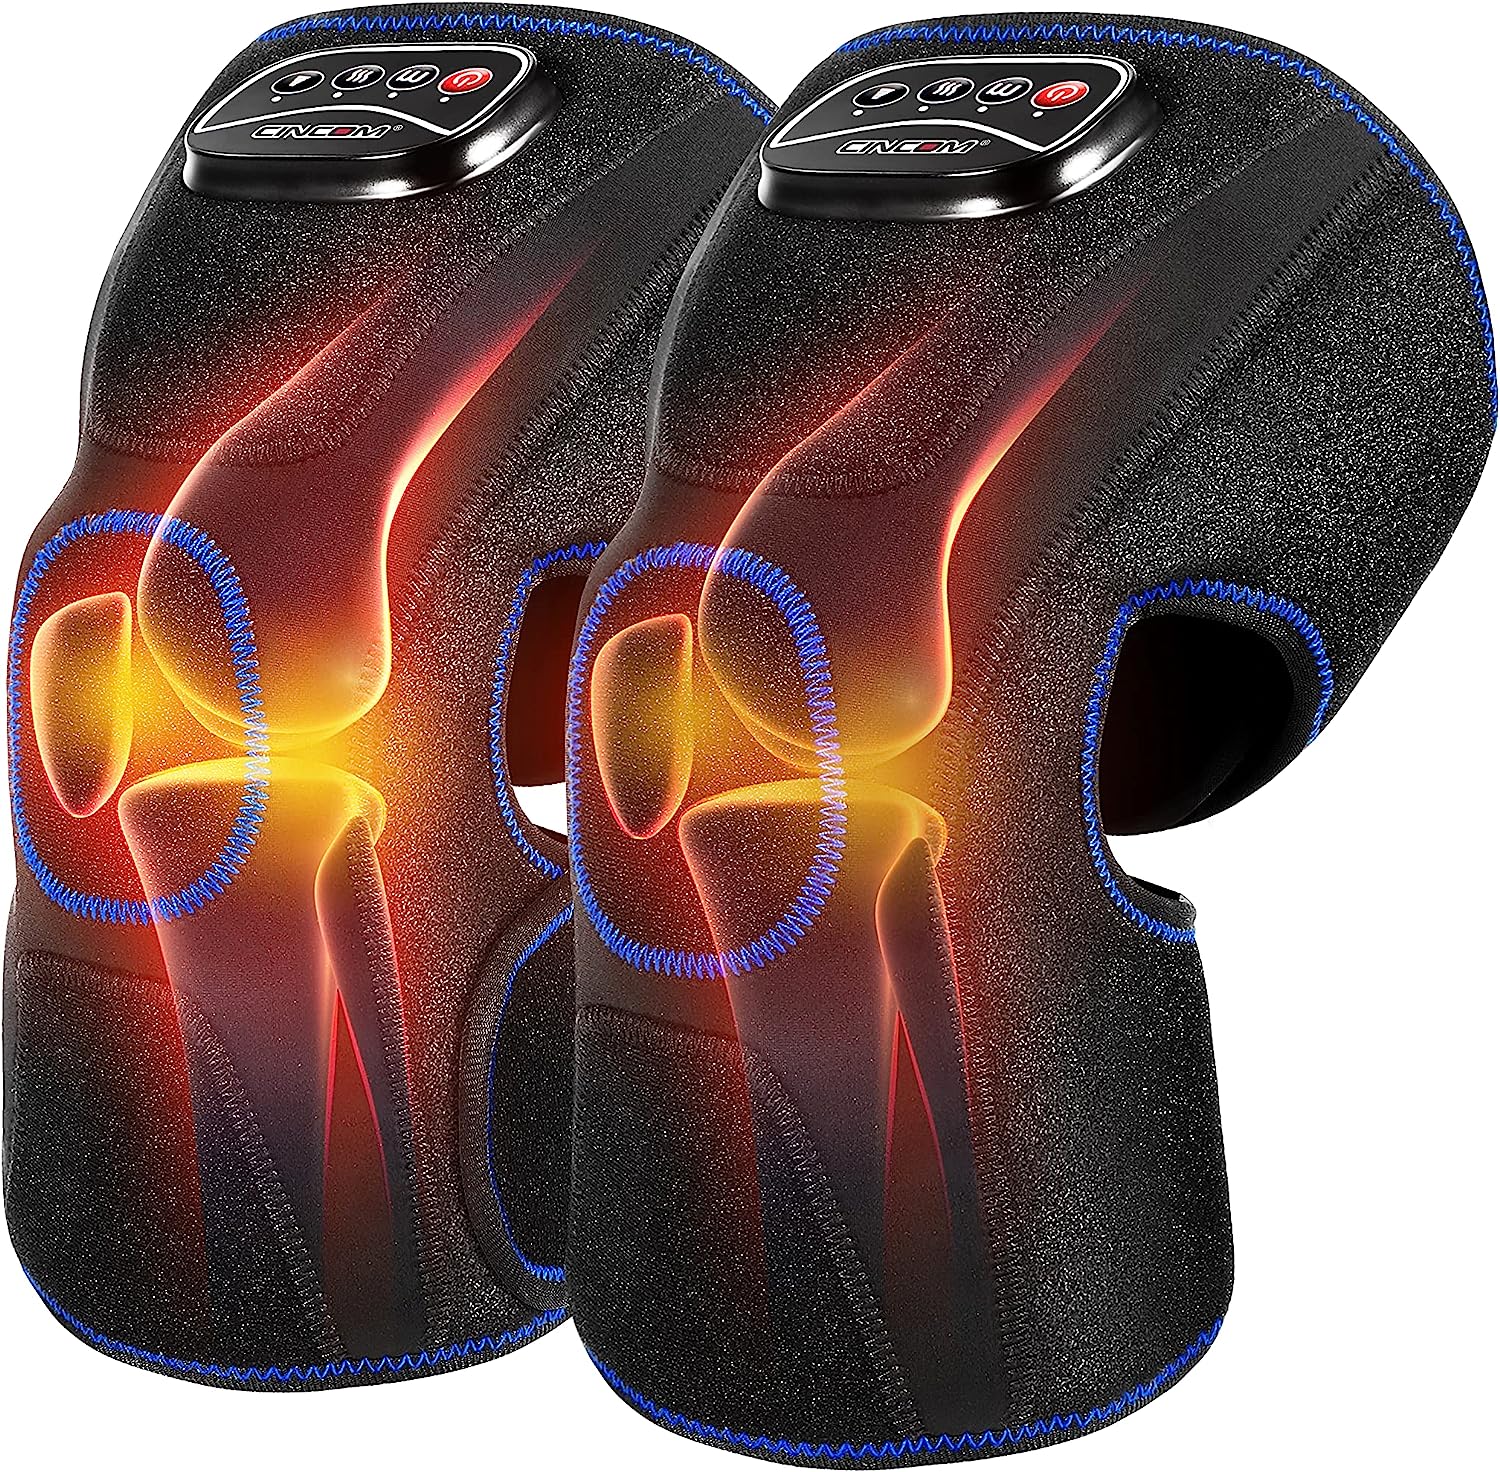 5V Temperature Control Heating Knee Massage Brace Hot Compress